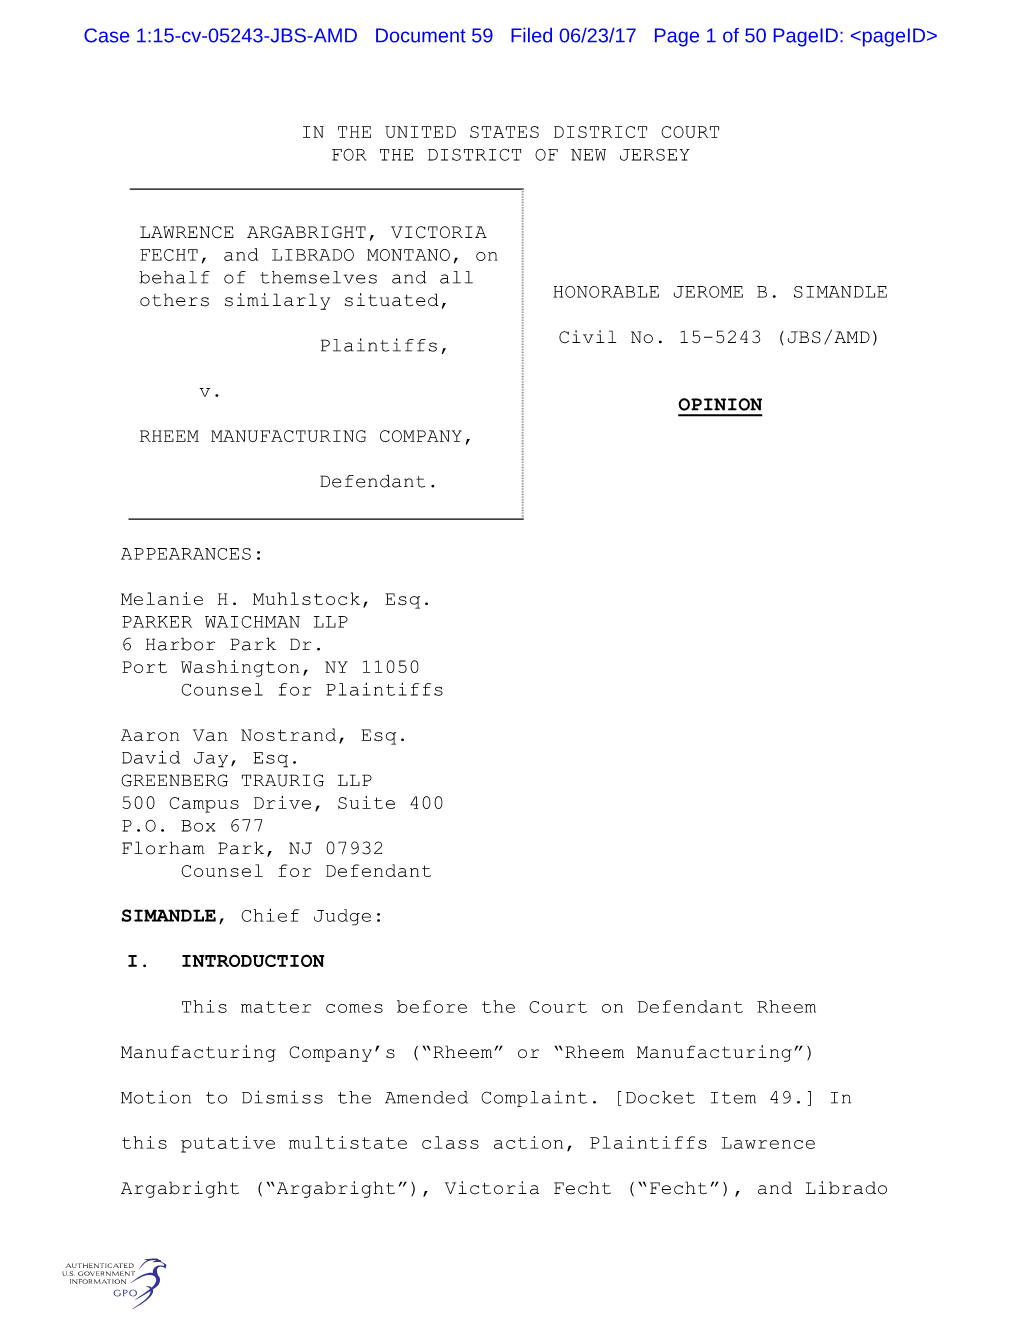 Case 1:15-Cv-05243-JBS-AMD Document 59 Filed 06/23/17 Page